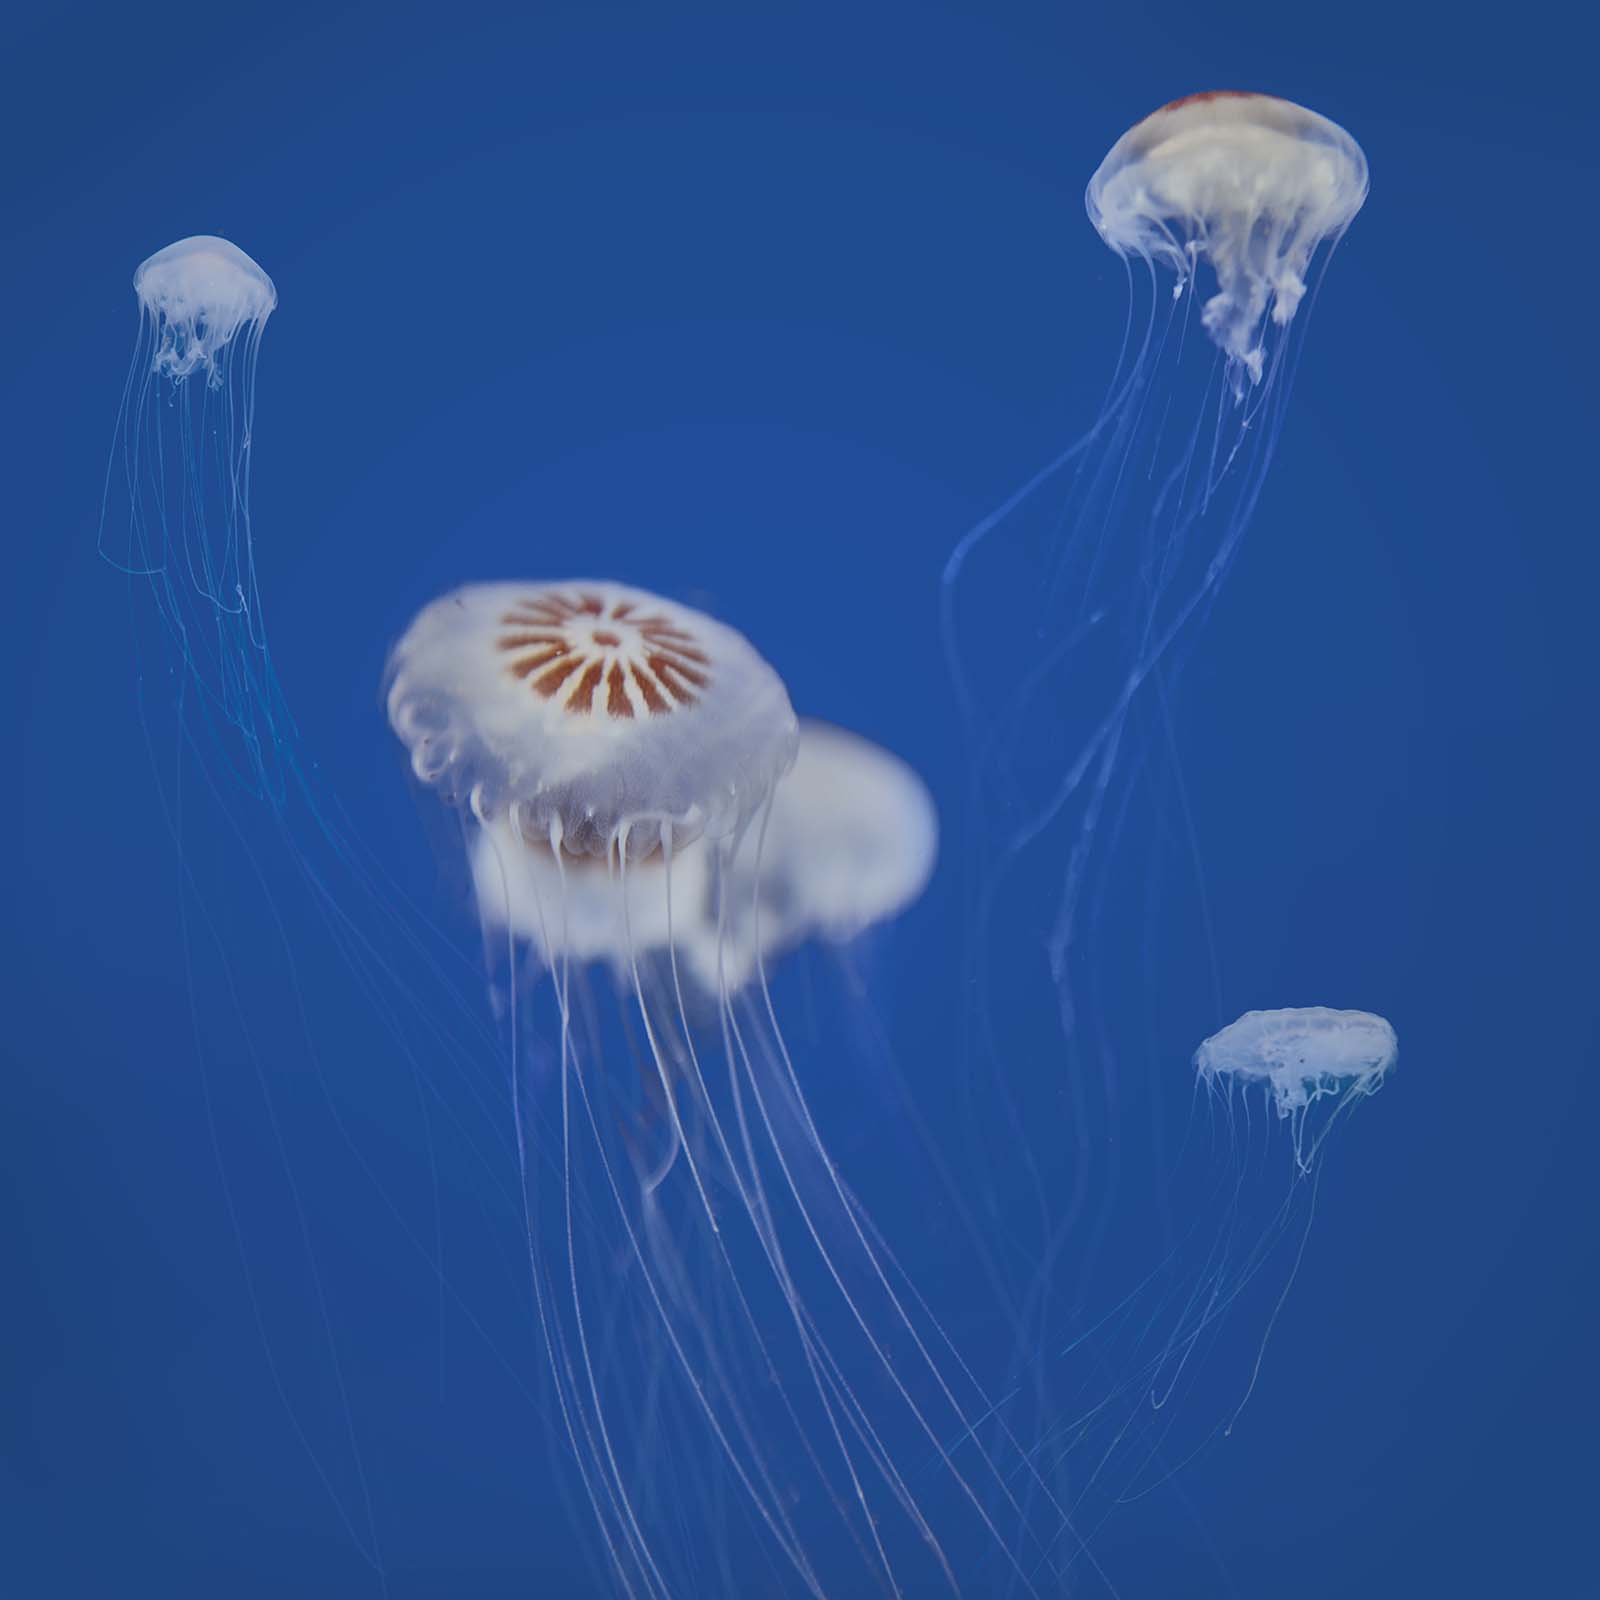 Jellyfishes / Medusas